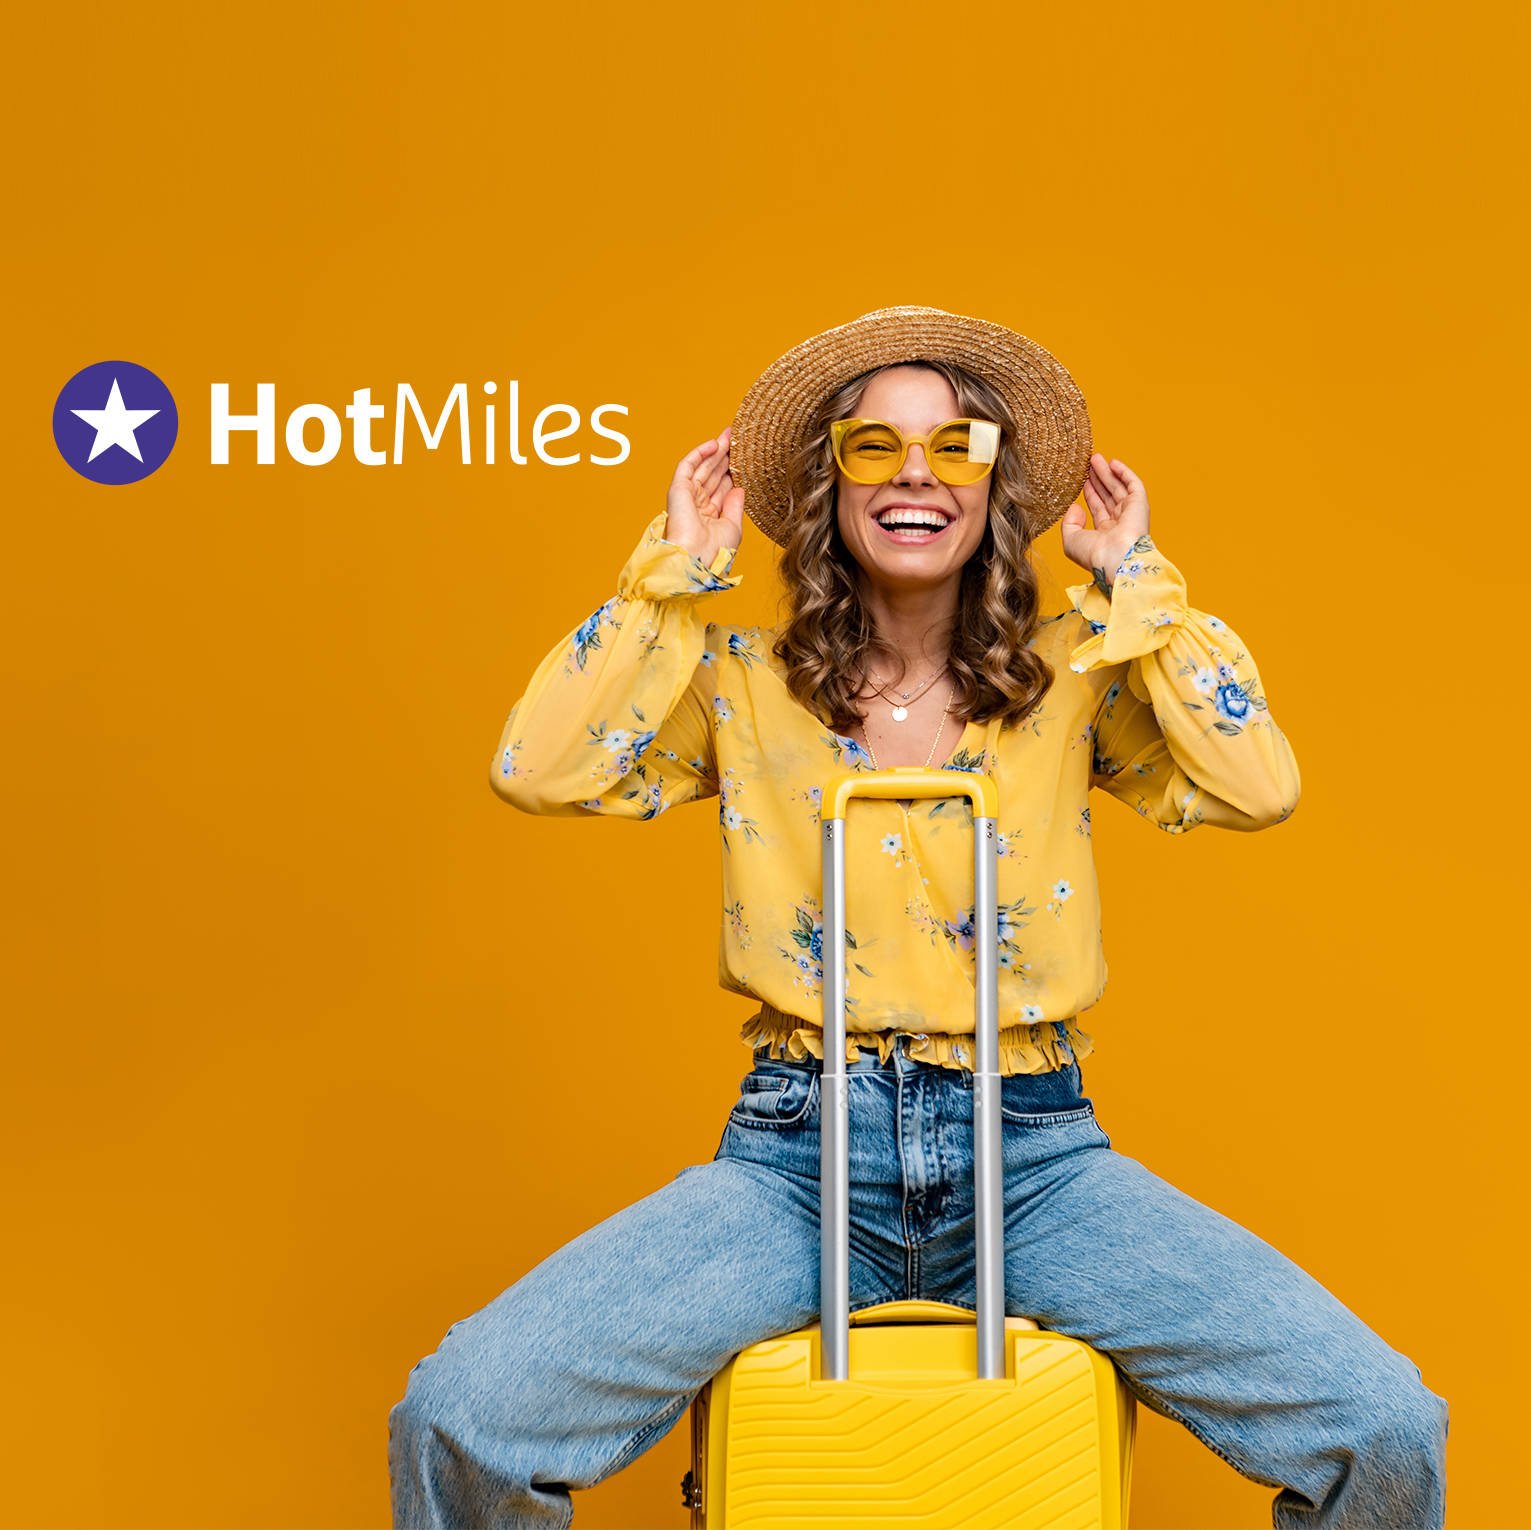 HotMiles - H-Hotels.com